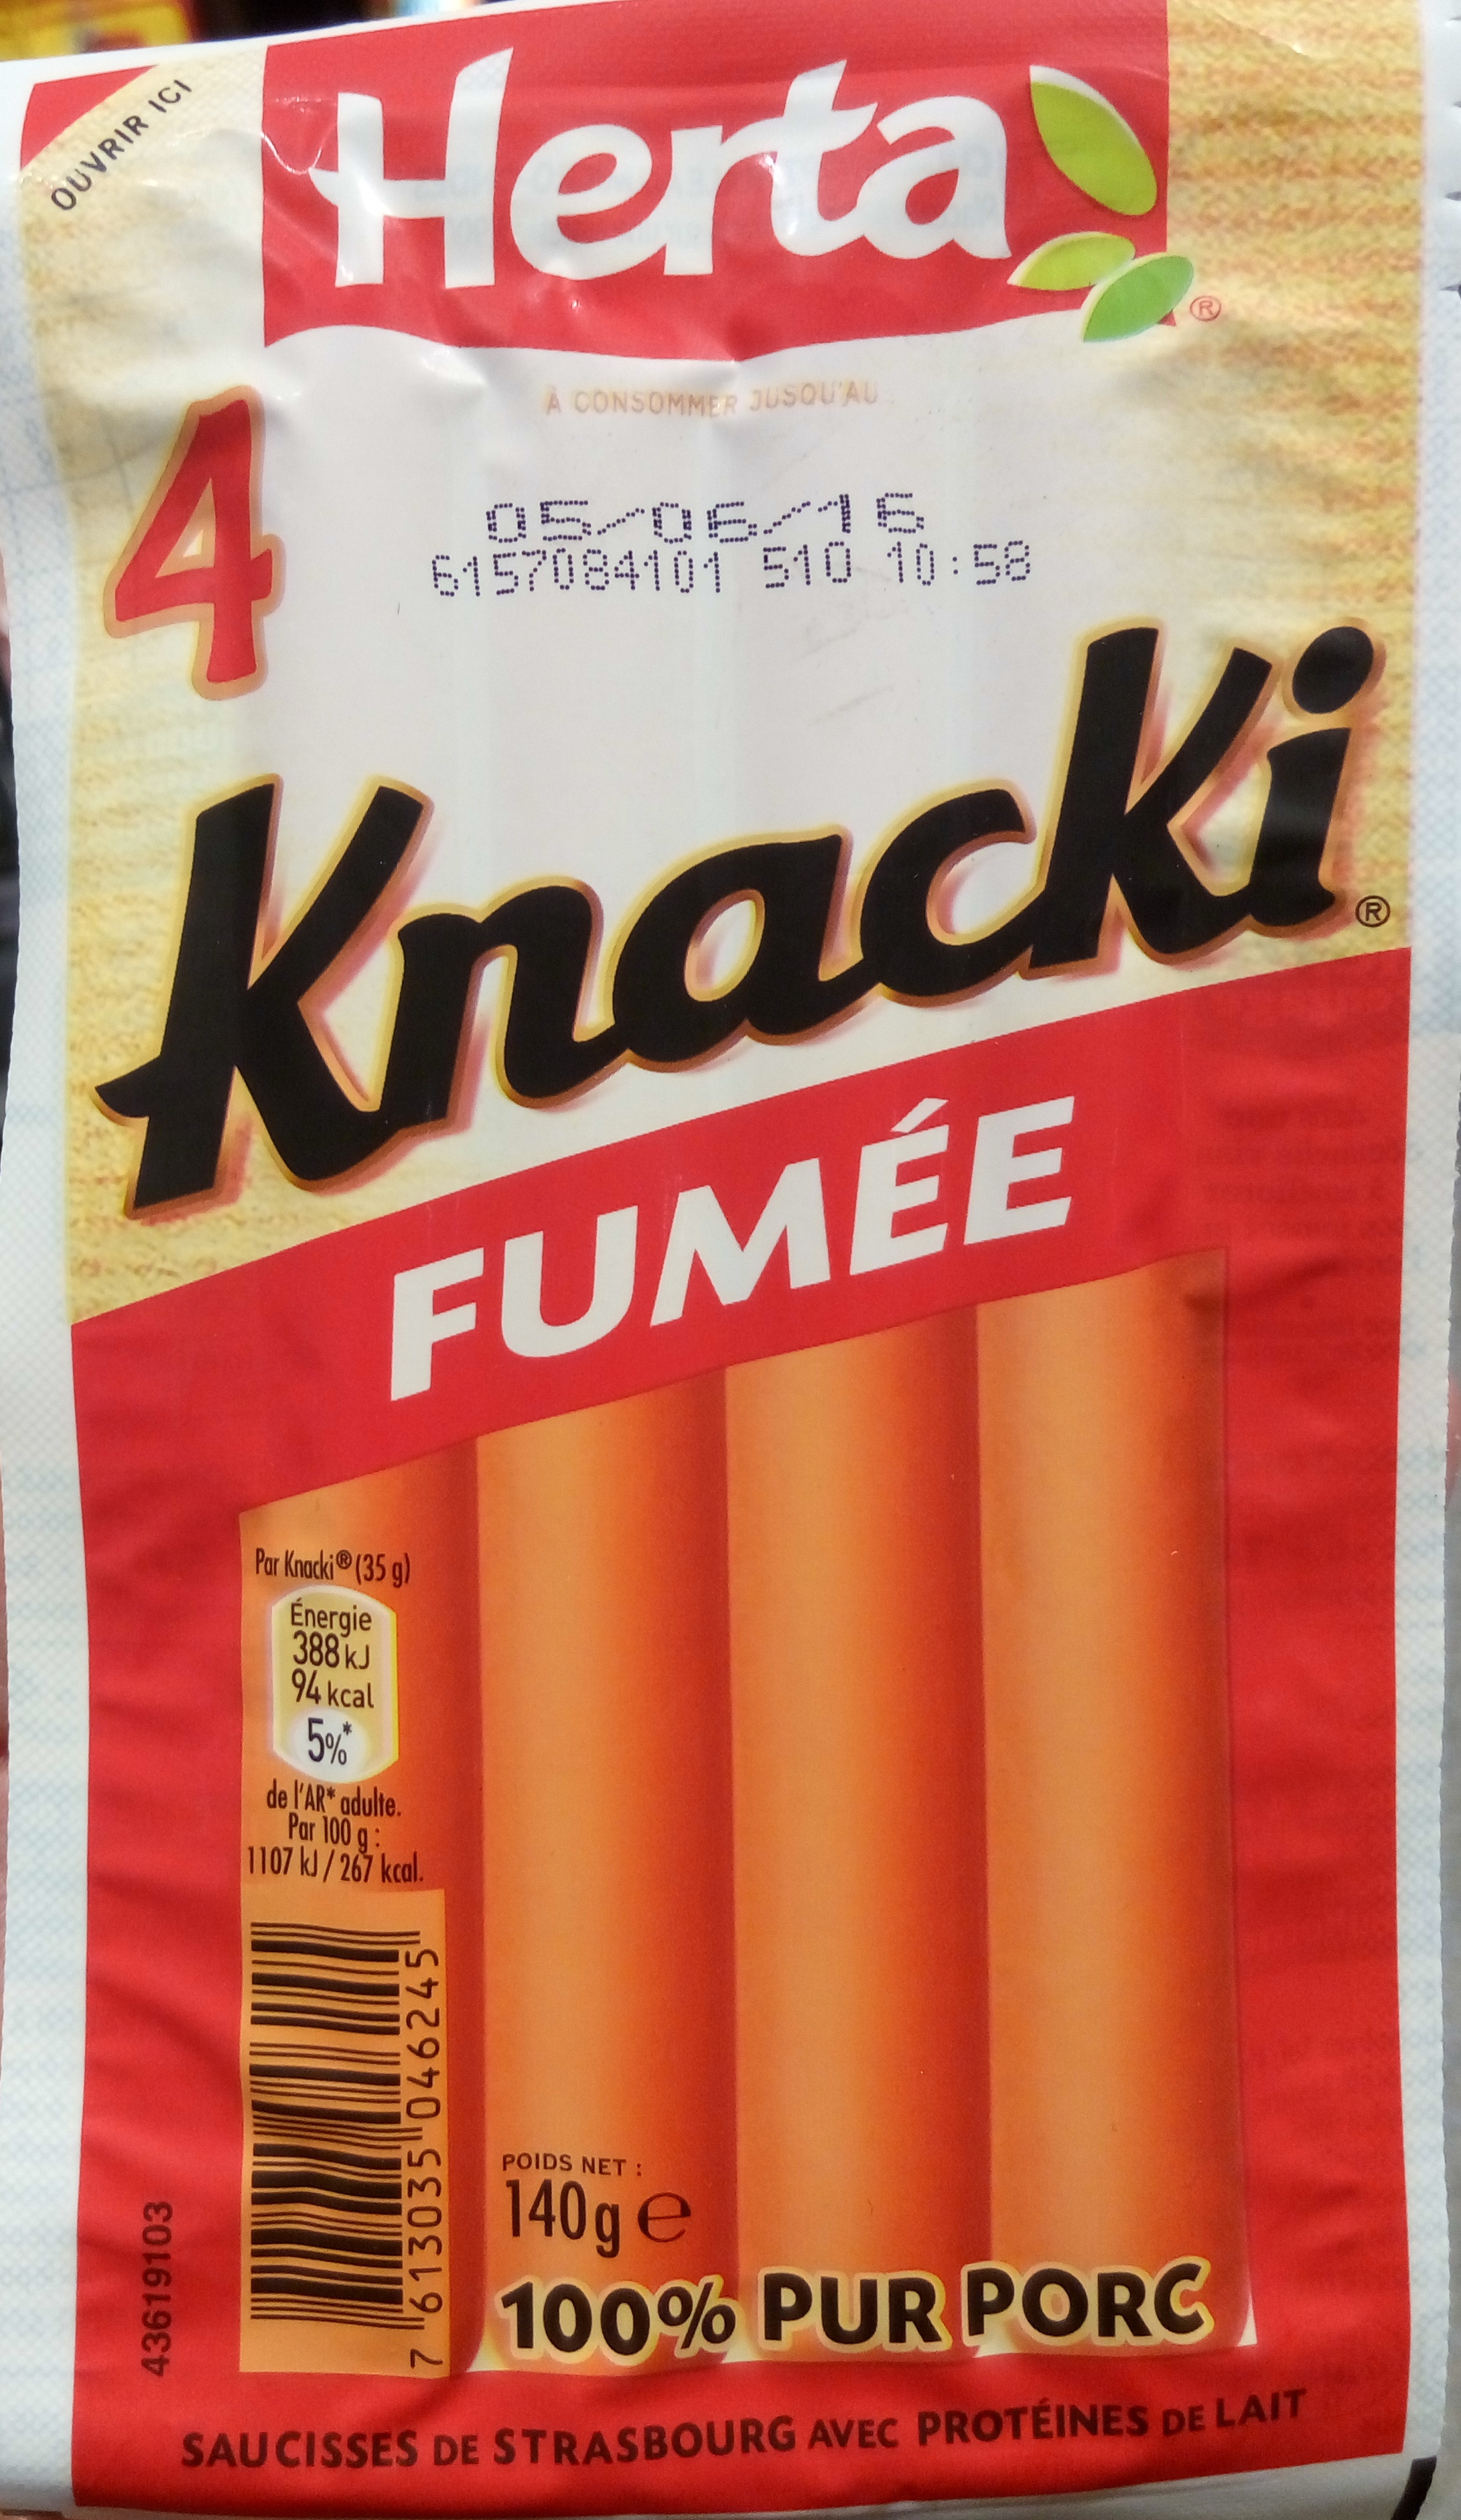 4 Knacki fumée - Product - fr